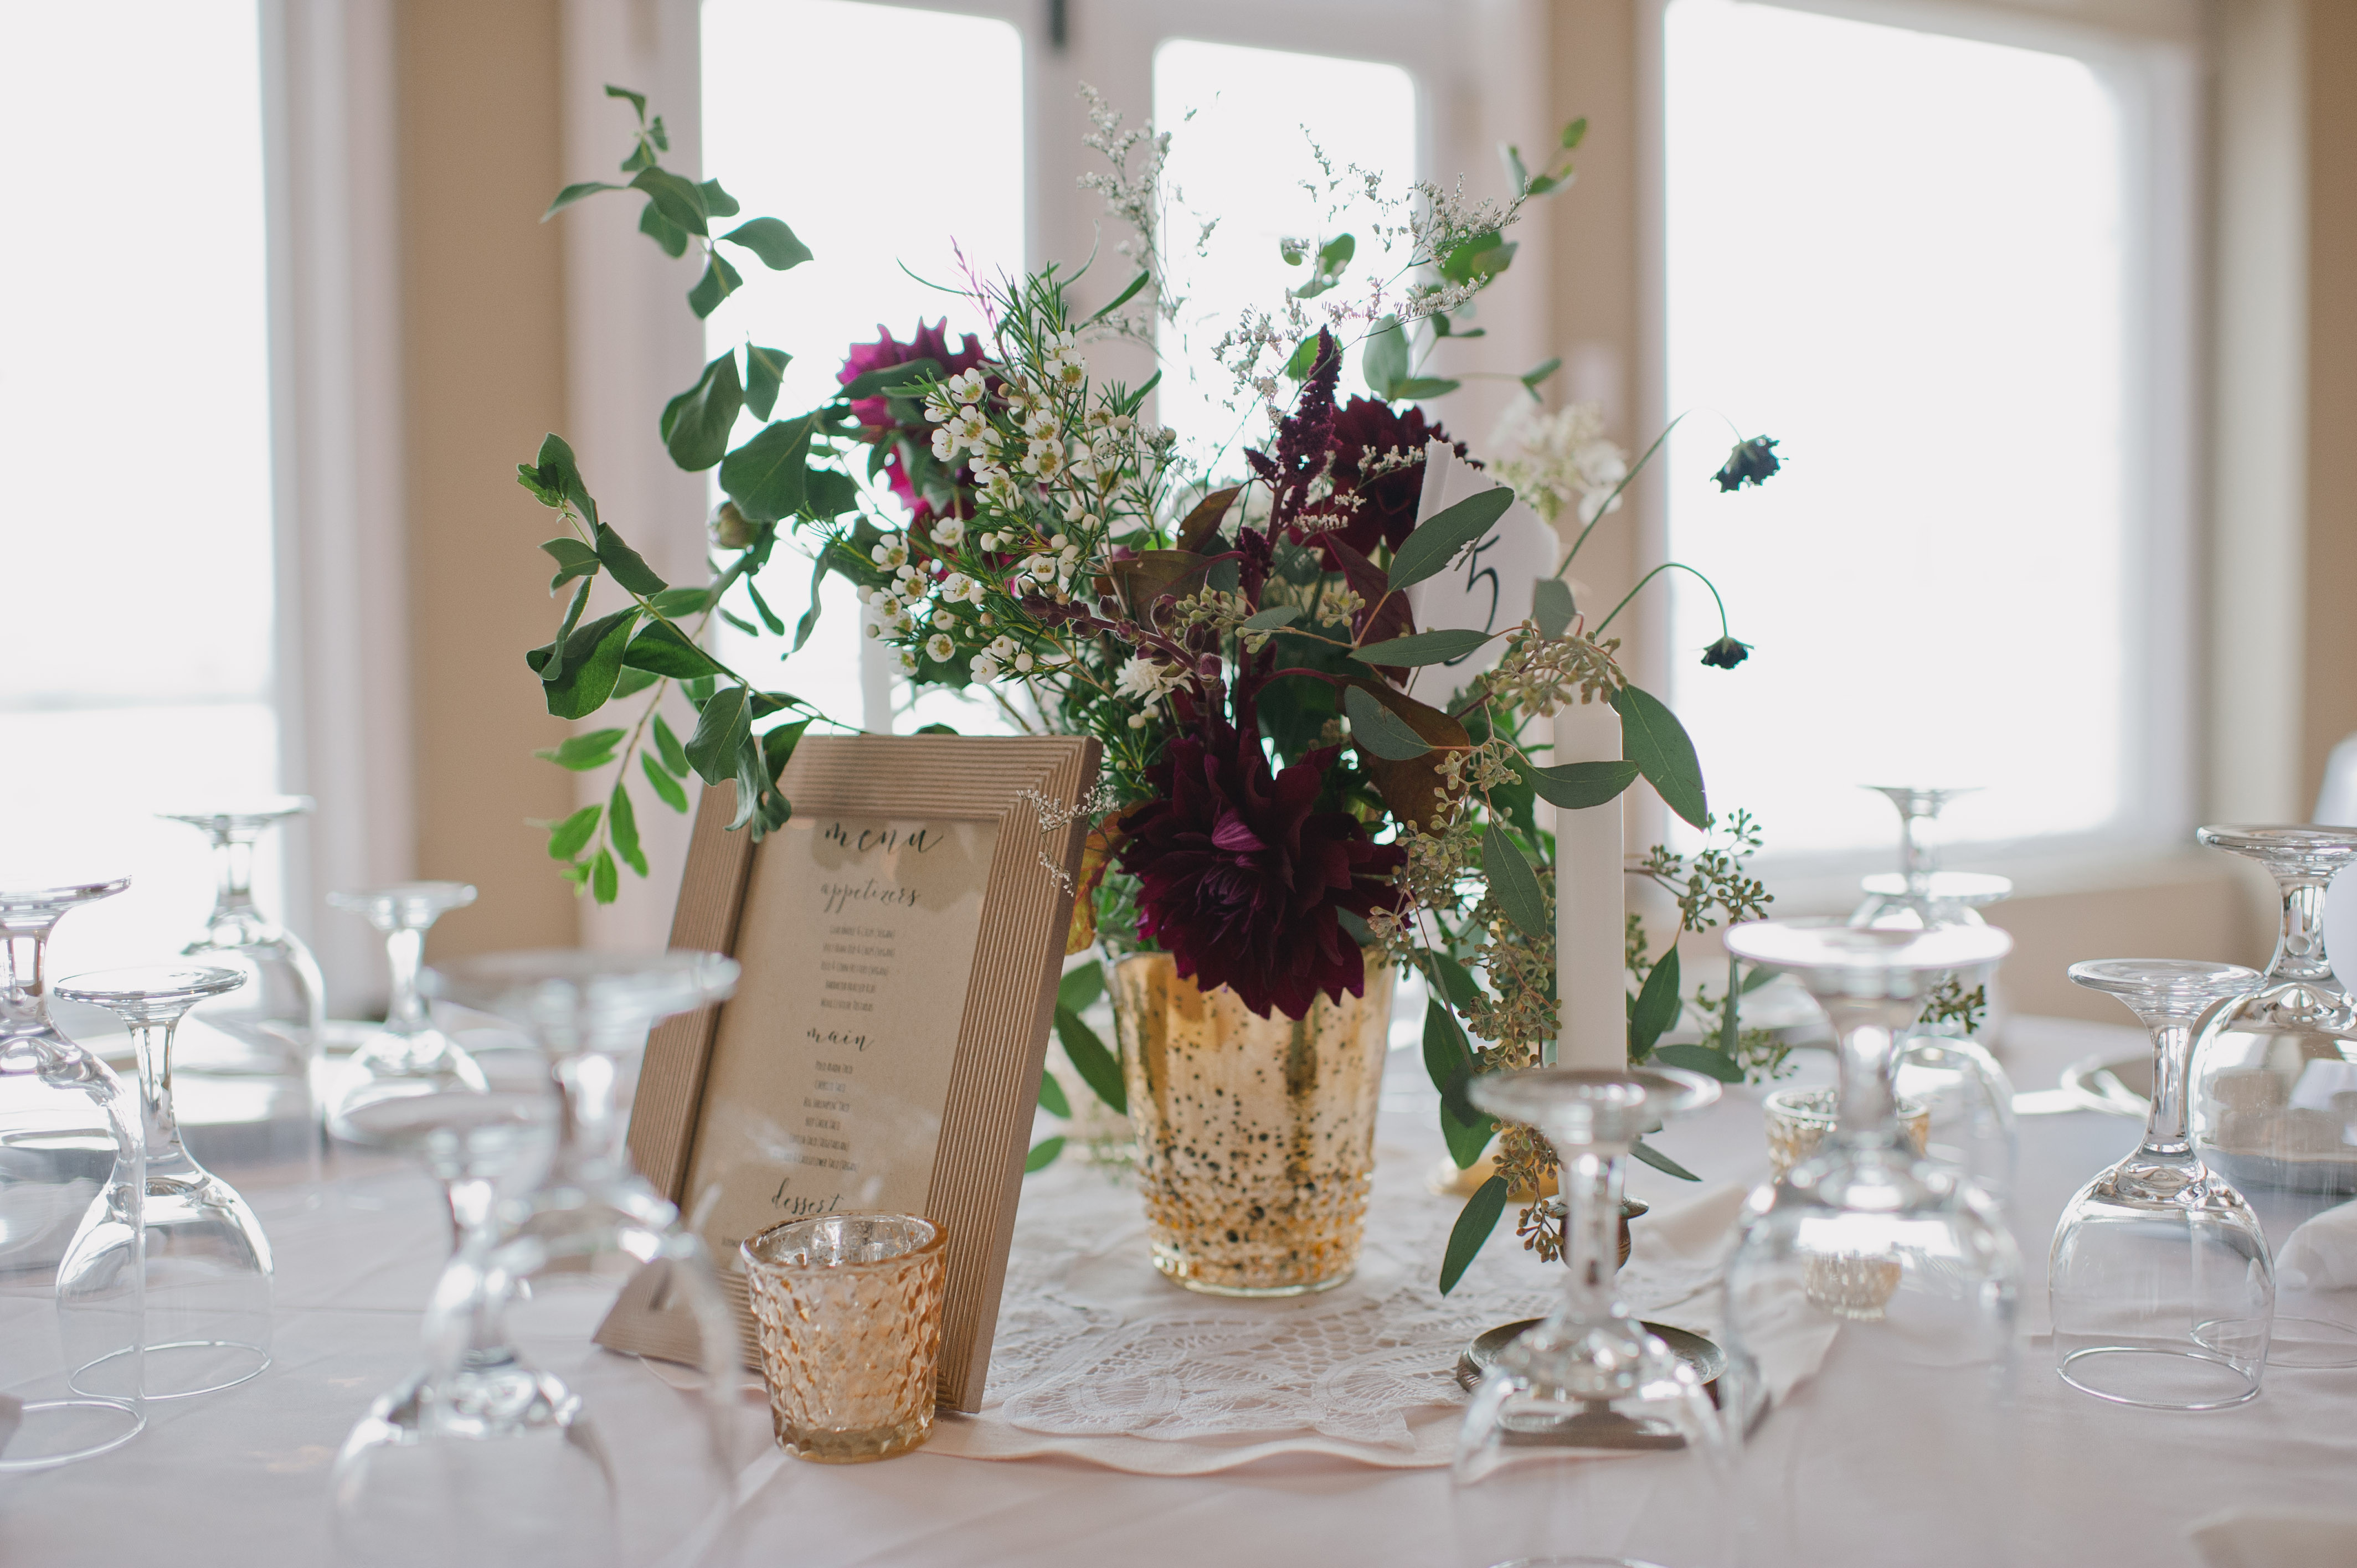 Best ideas about DIY Flower Wedding
. Save or Pin DIY Wedding Flowers Now.